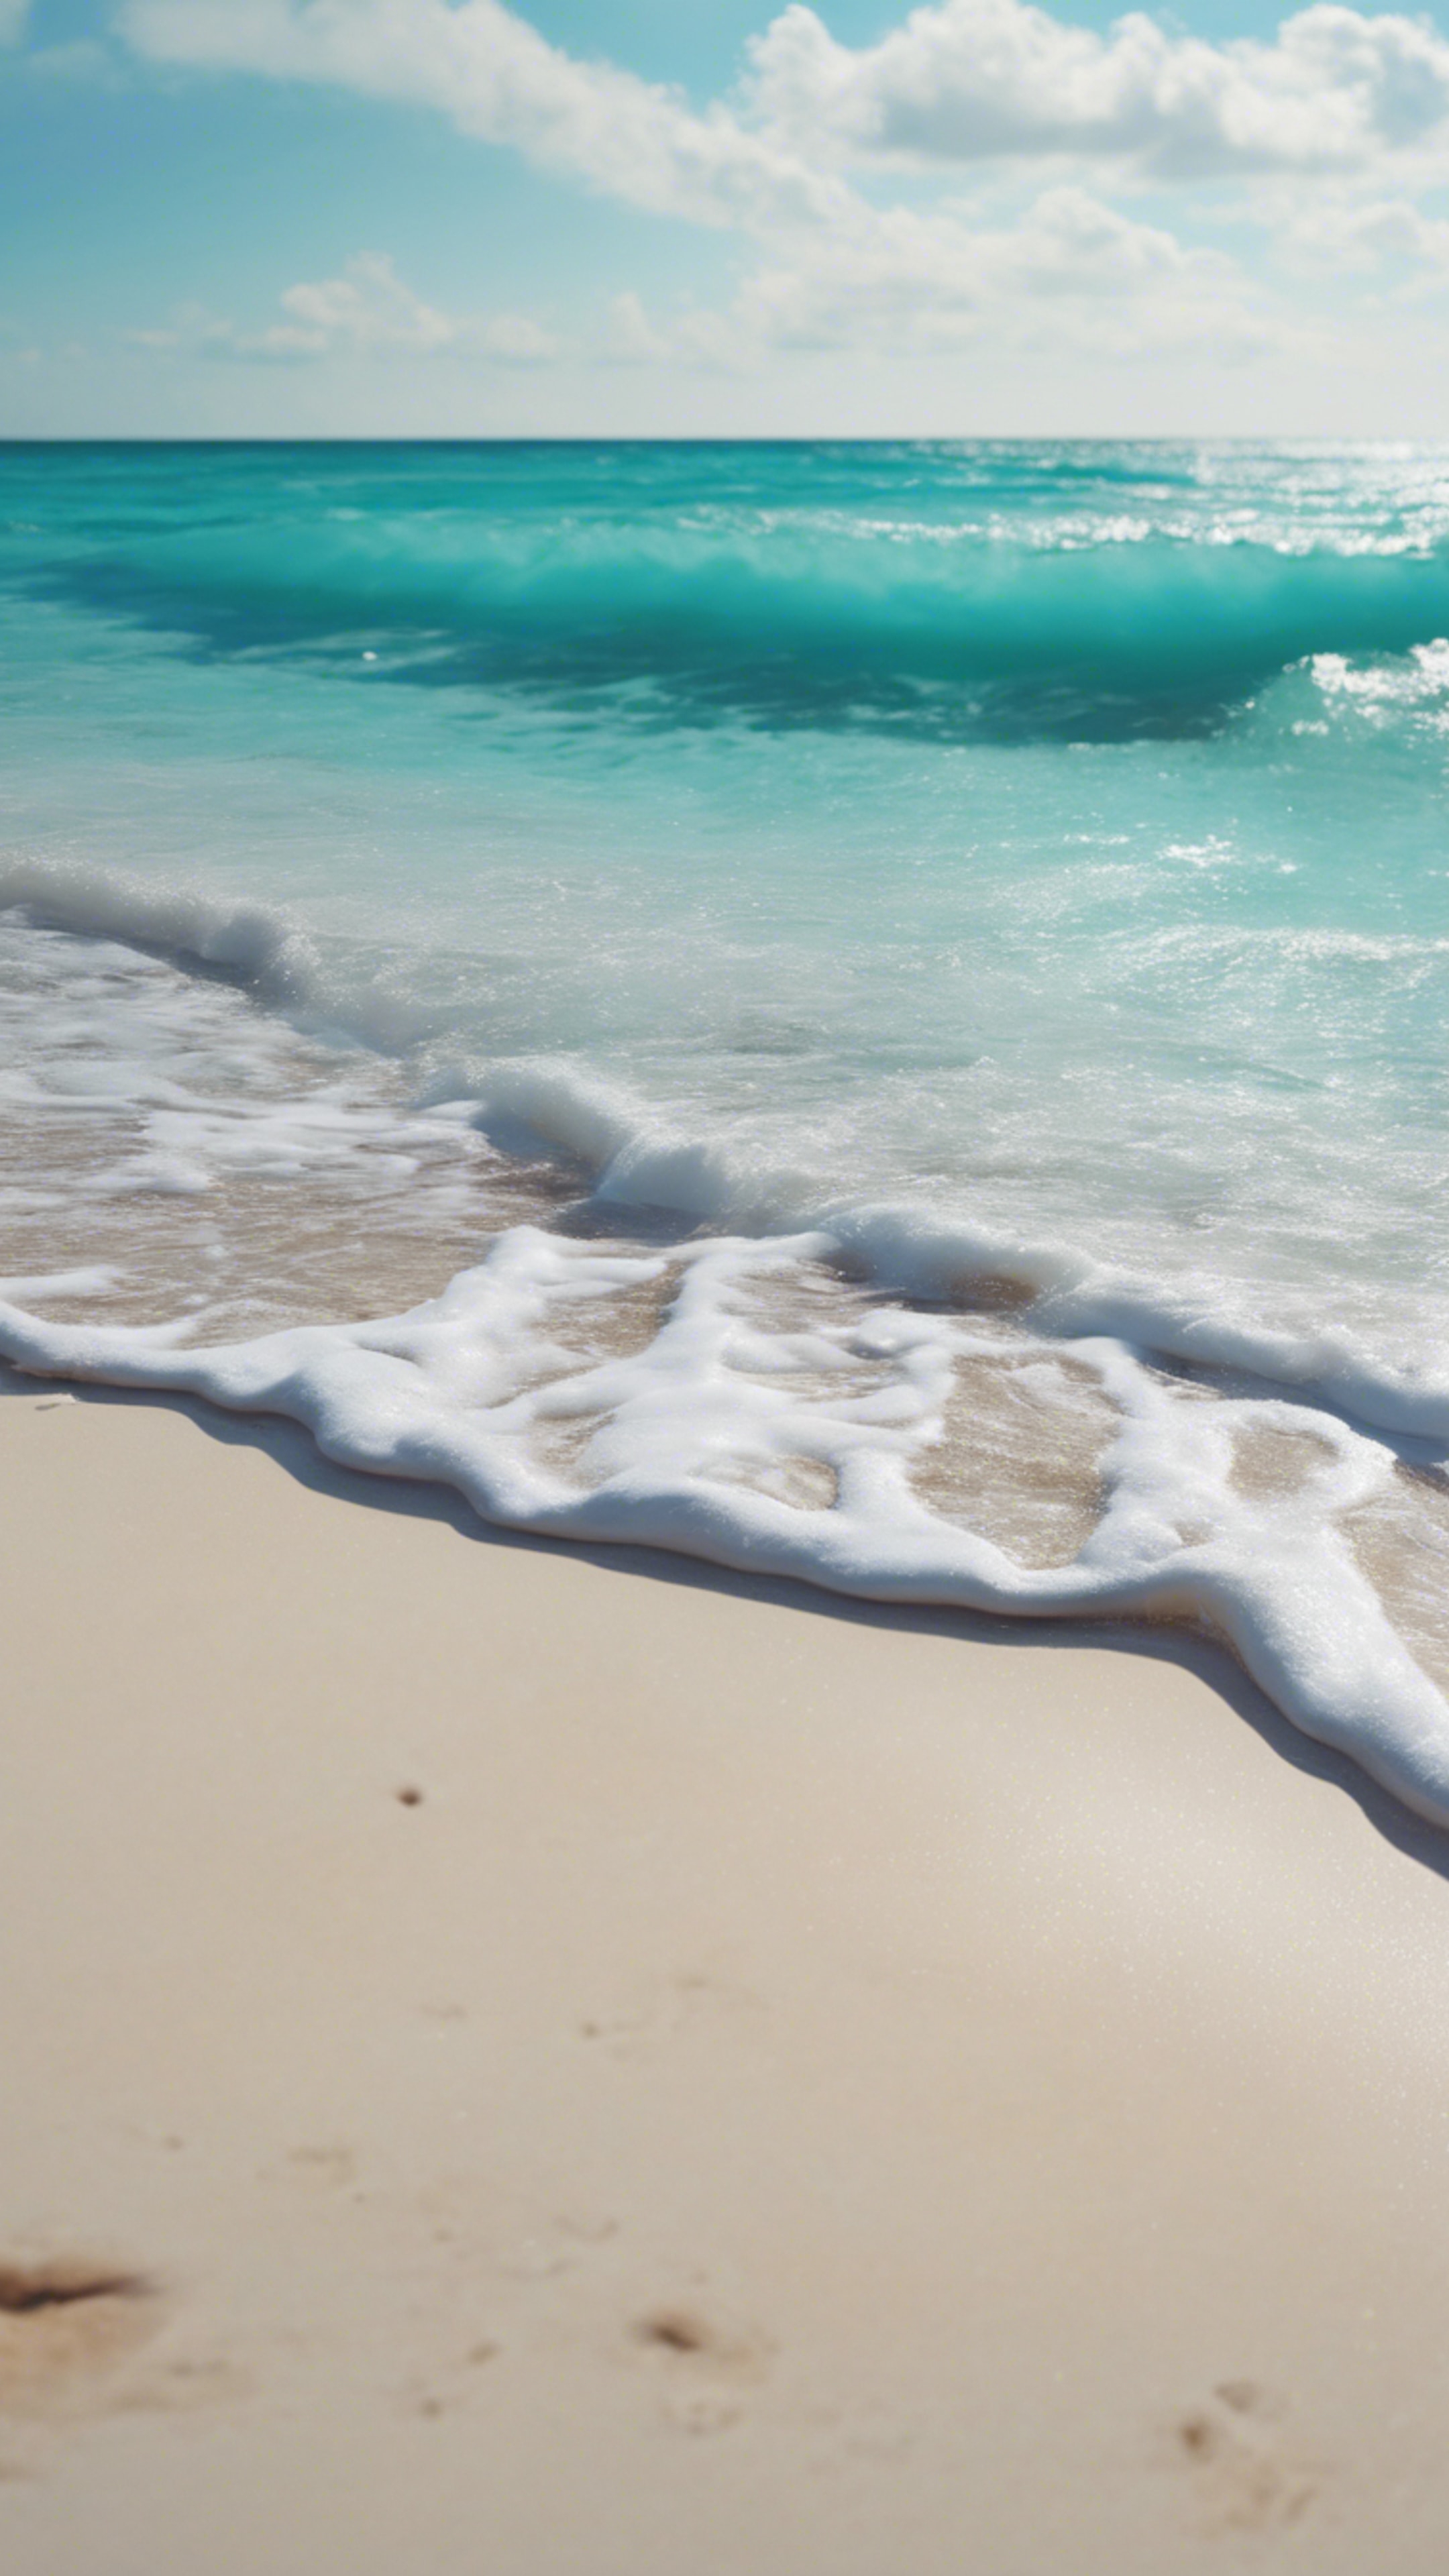 A picturesque view of a turquoise sea lapping against a white sandy beach under a bright summer sky. duvar kağıdı[6af705bde98447e7b5f0]